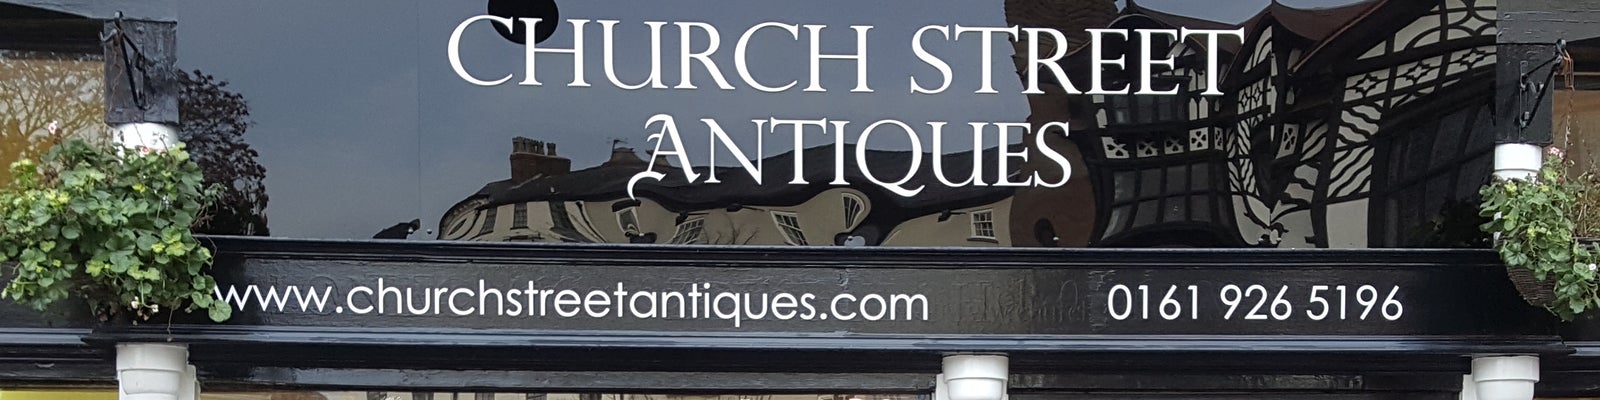 Church Street Antiques & Interiors